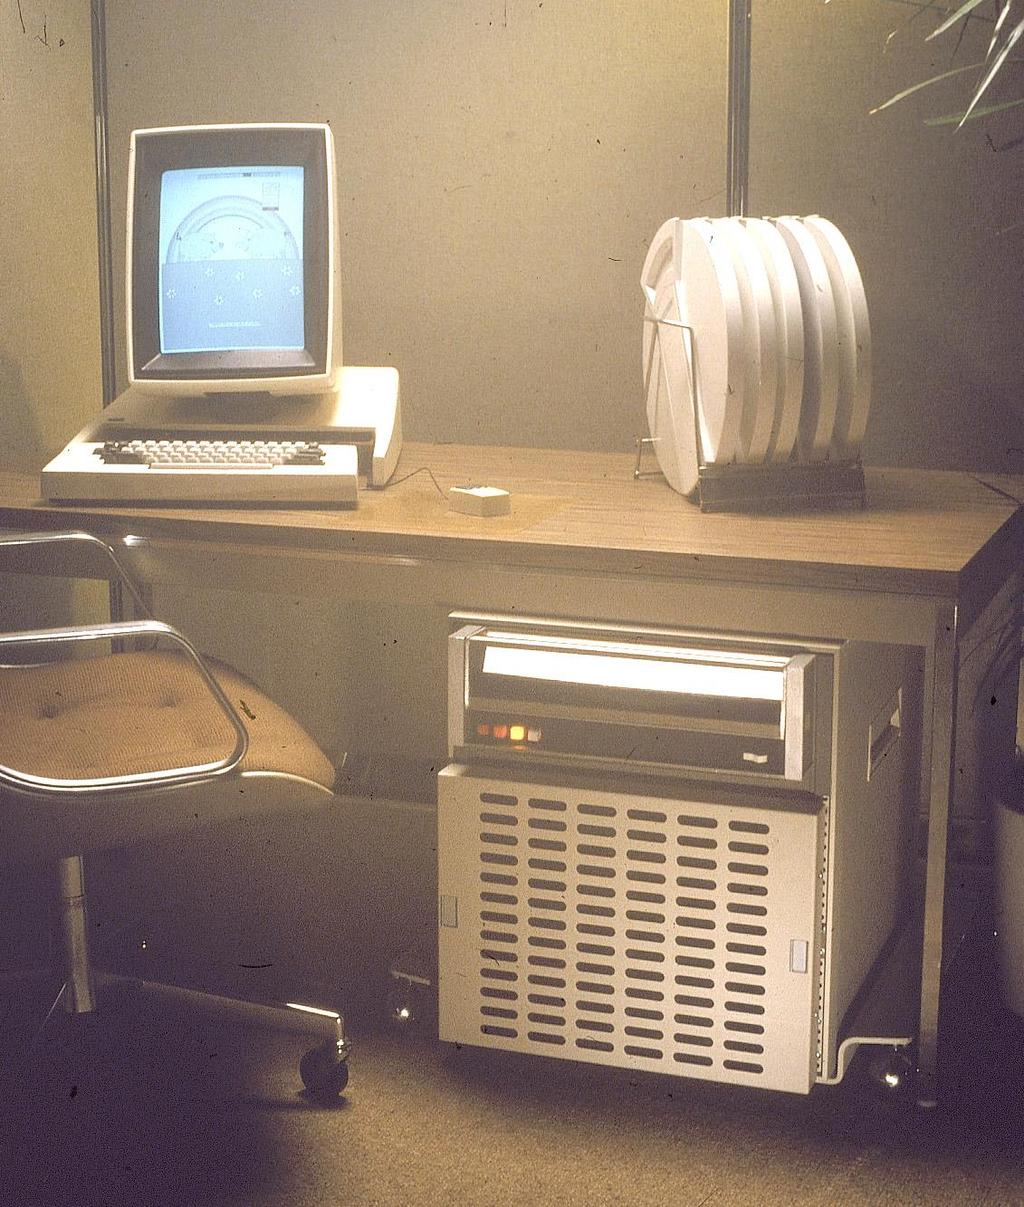 Xerox Alto (1973 prototype workstation, the world's first